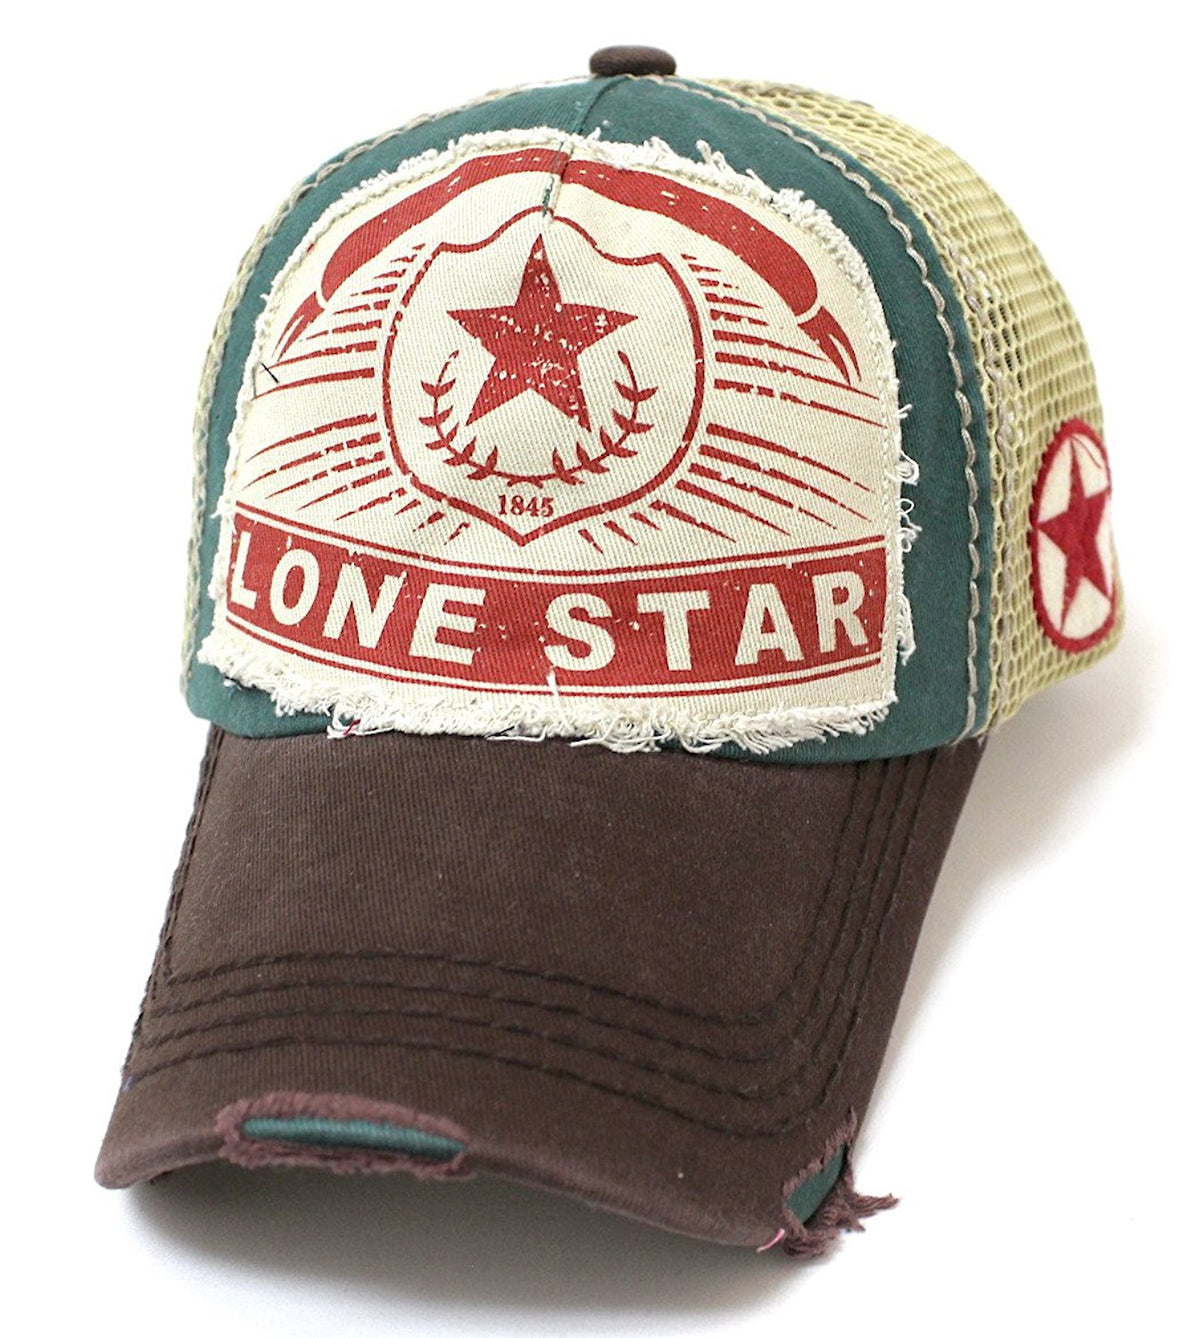 CAPS 'N VINTAGE Meshback Lonestar Distressed, Patch Embroidery Trucker Hat - Caps 'N Vintage 